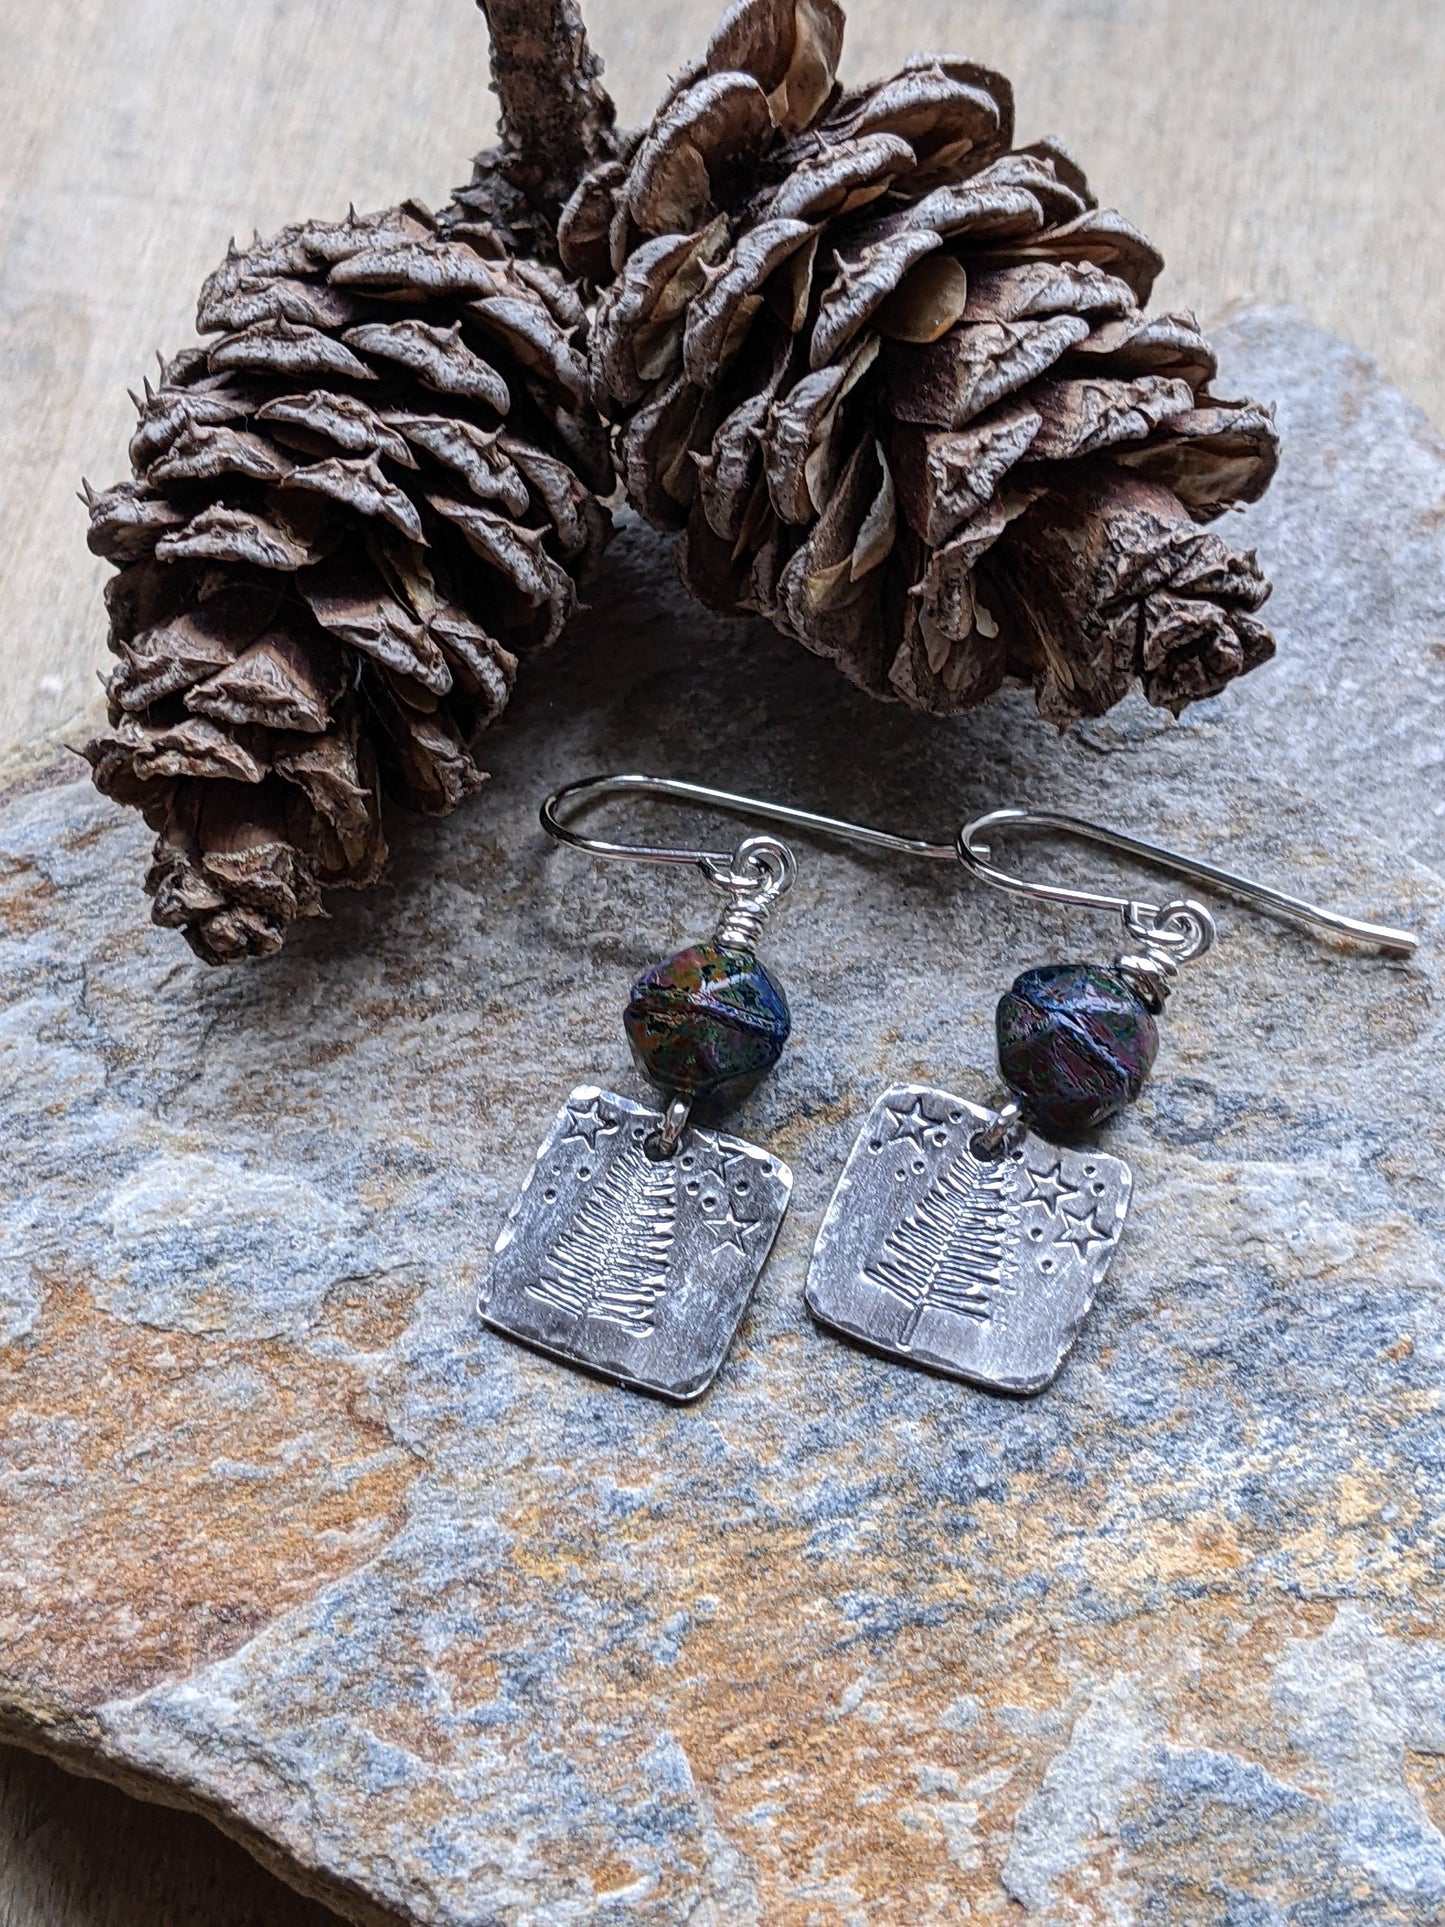 Sterling Silver Pine Tree Earrings